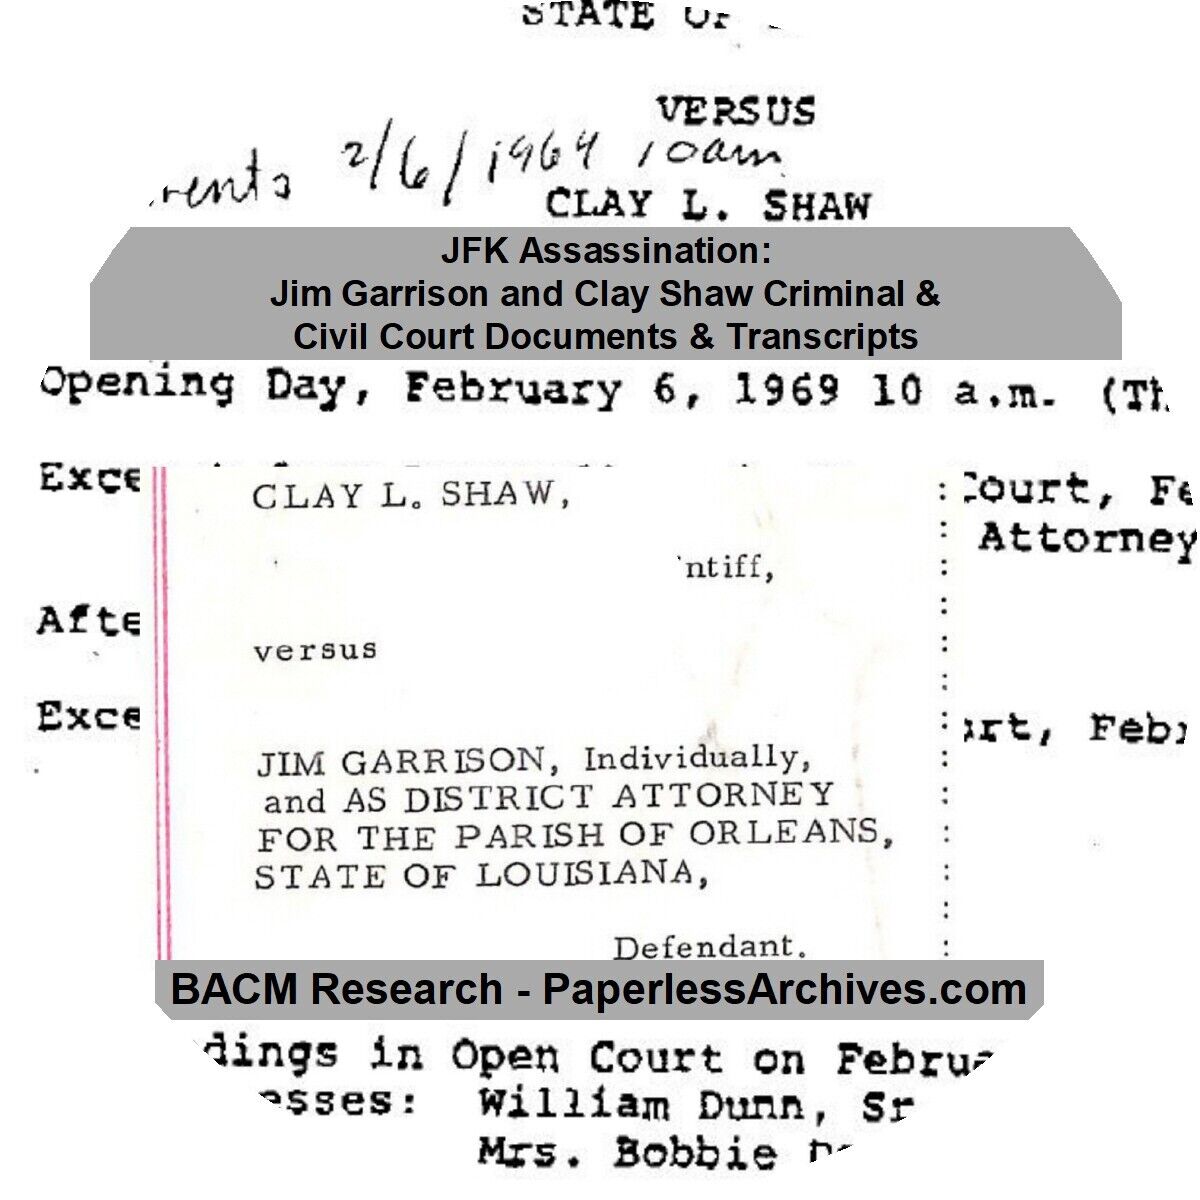 JFK Assassination: Jim Garrison and Clay Shaw Criminal & Civil Court Documents